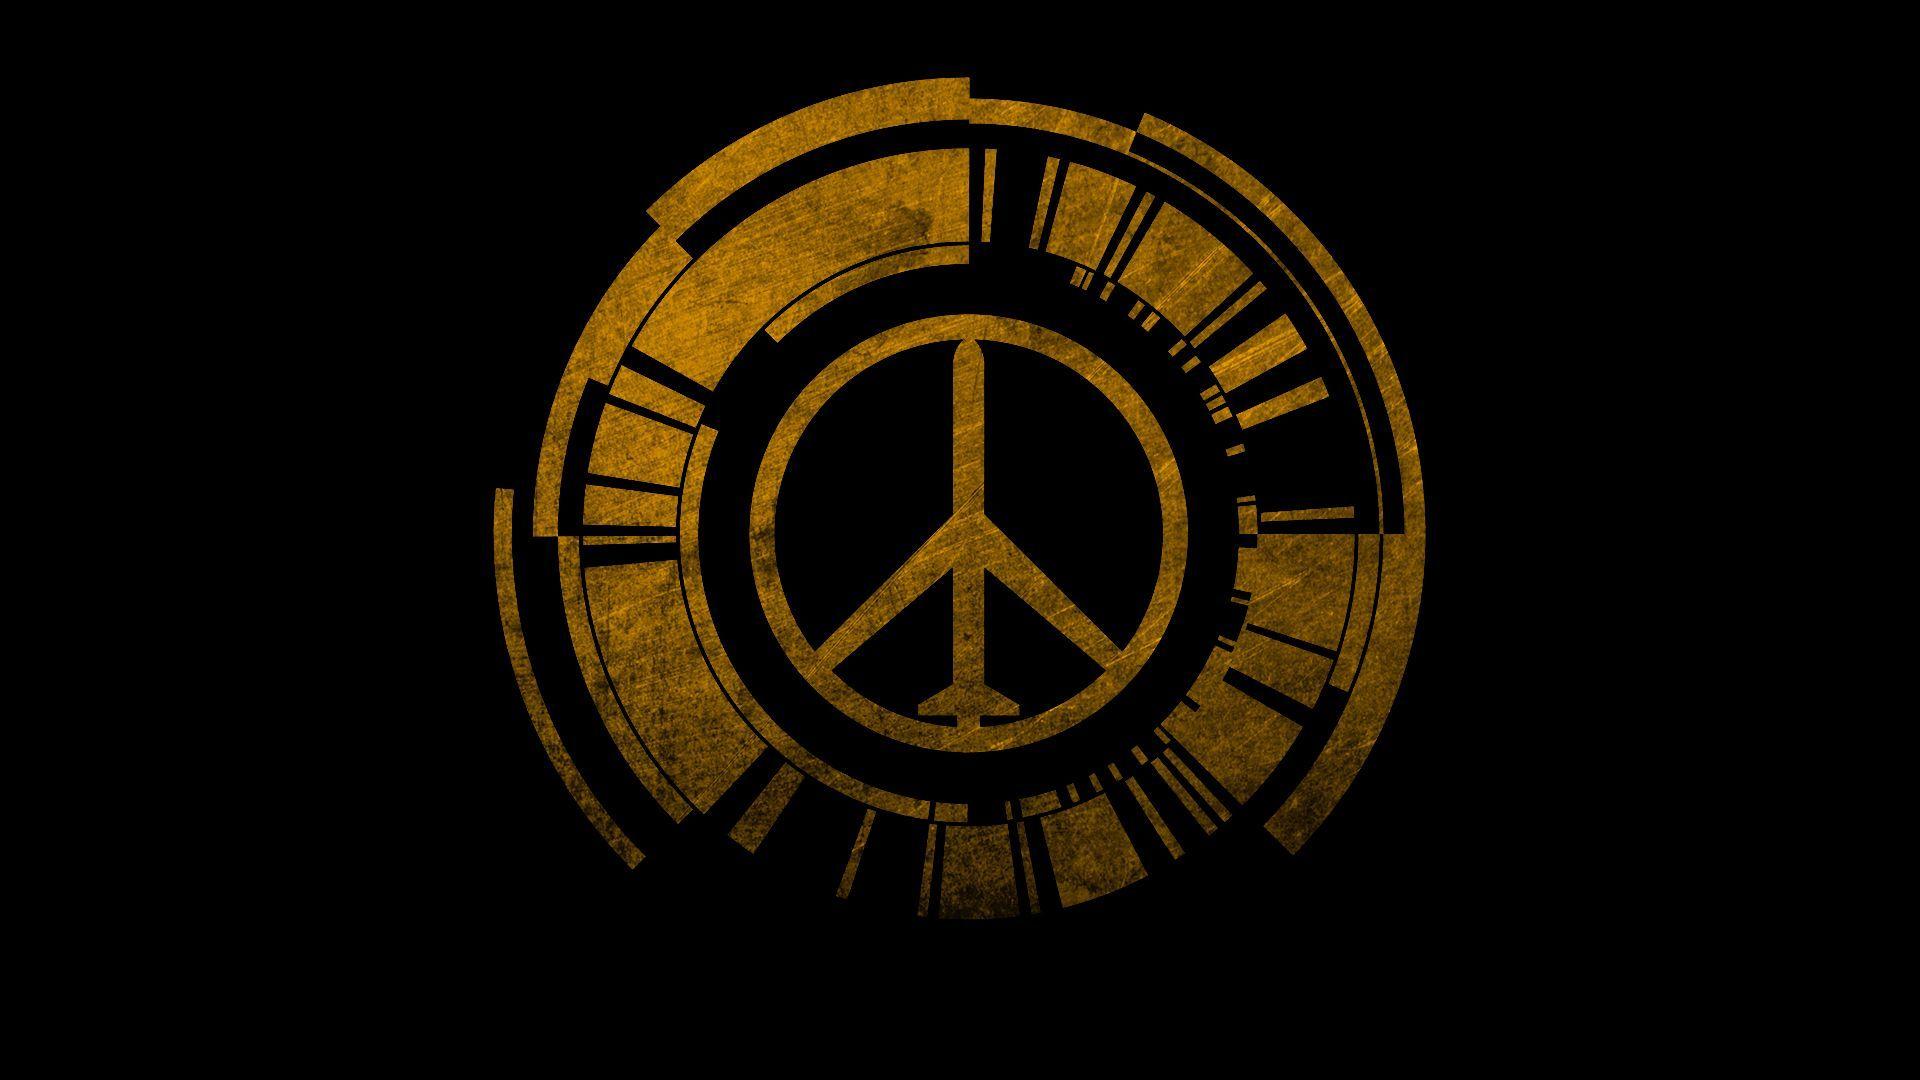 Metal Gear Solid Peace. Hintergrundbilder hd, Hintergrundbilder